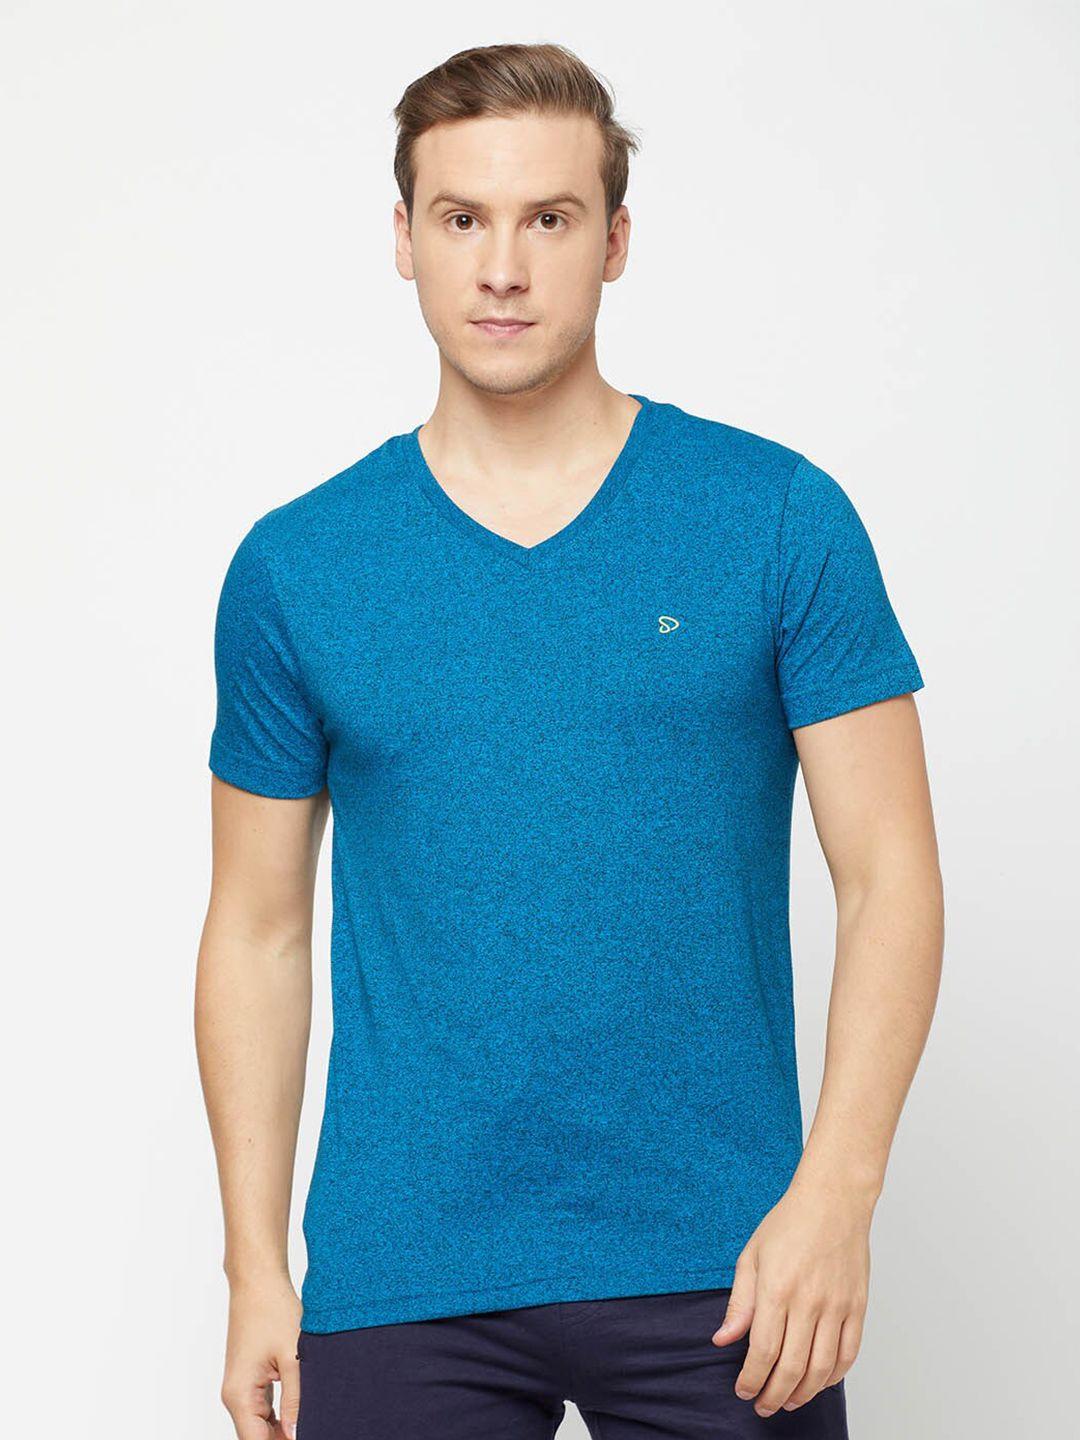 sporto men blue v-neck t-shirt